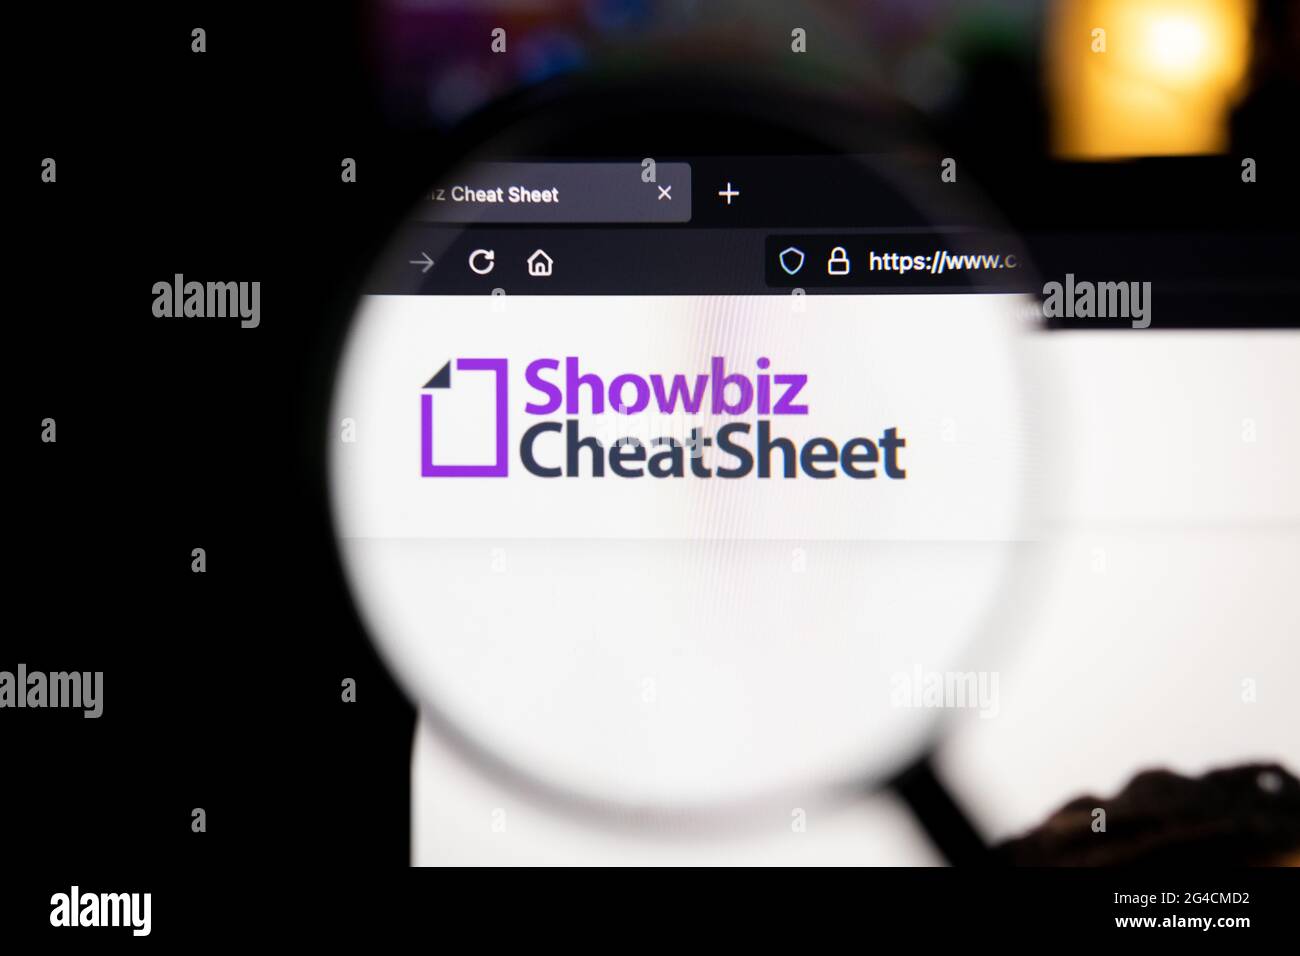 Showbiz cheatsheet Company logo su un sito web, visto su uno schermo del computer attraverso una lente di ingrandimento. Foto Stock